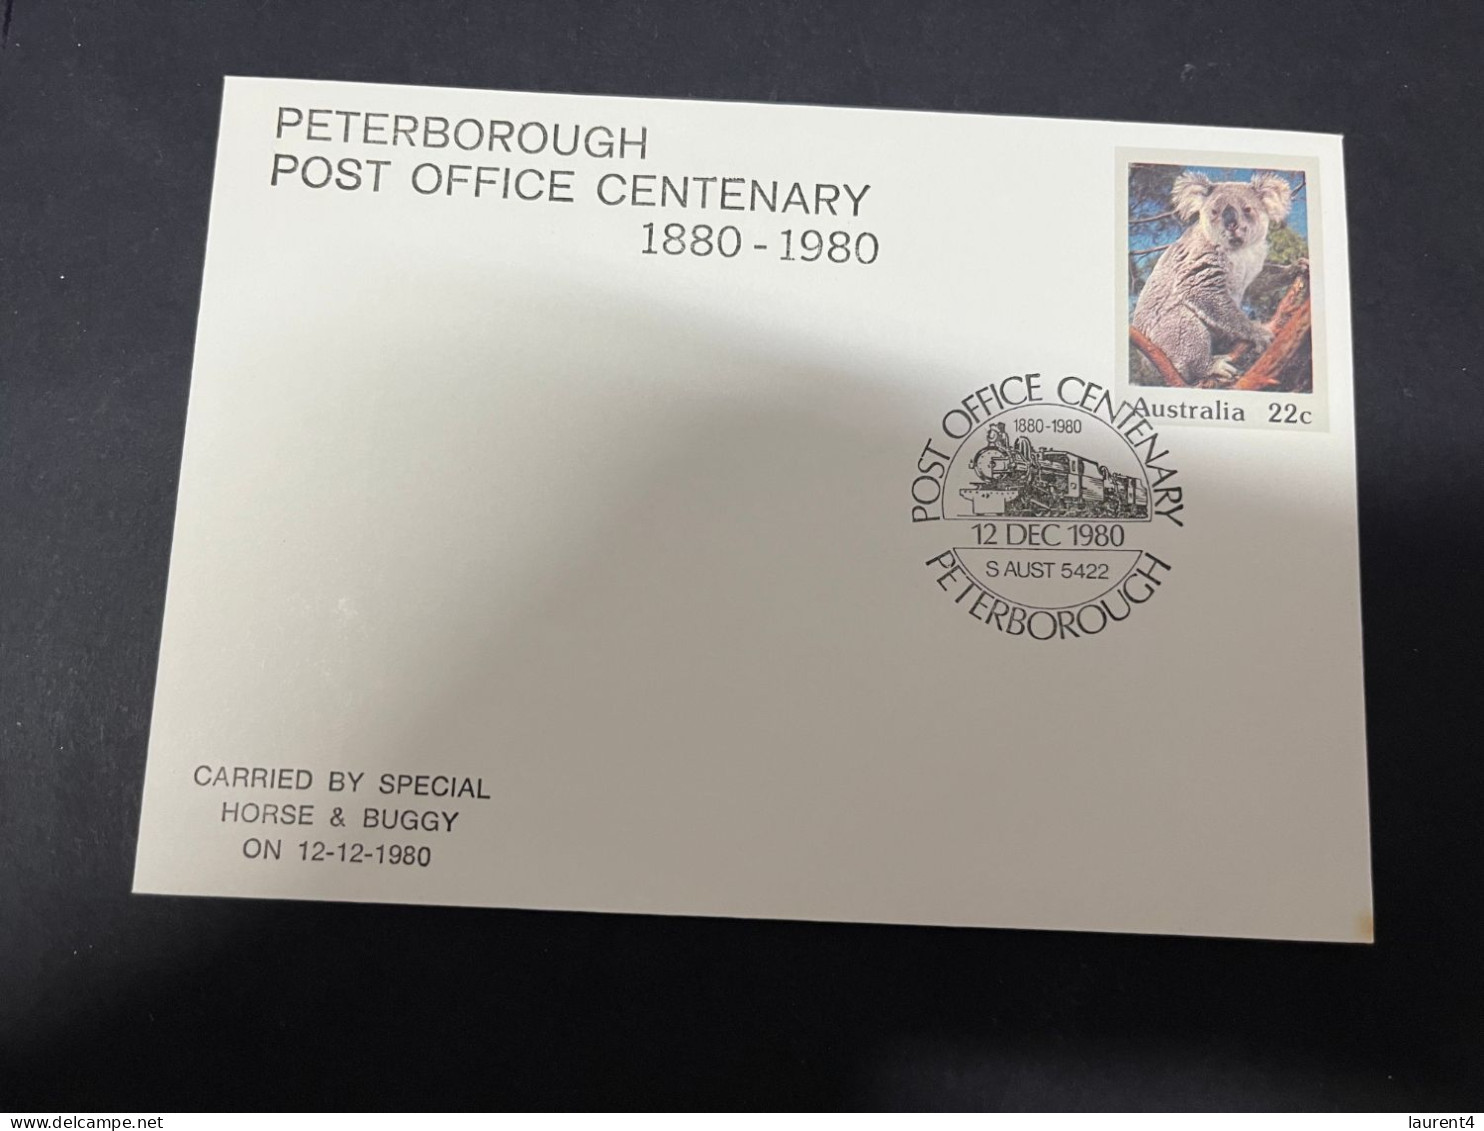 30-4-2023 (3 Z 29) Australia FDC (1 Cover) 1980 - Peterborough Post Office Centenary (Koala) - Premiers Jours (FDC)